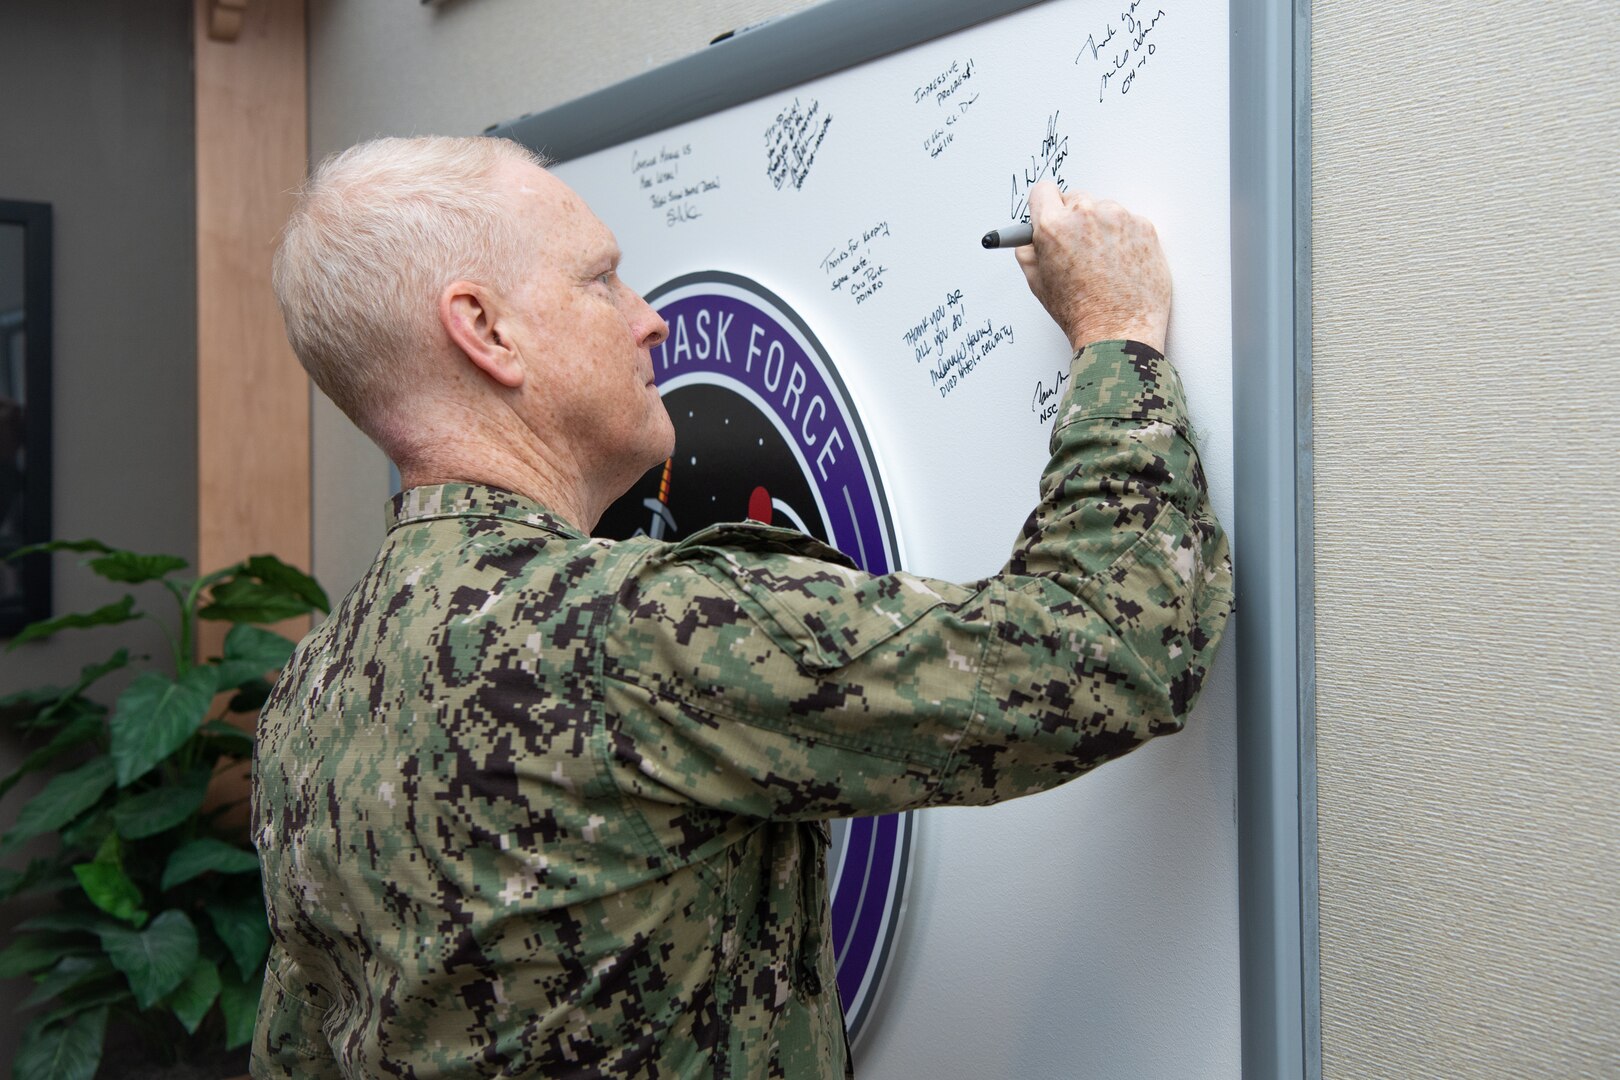 Man in uniform signs a board